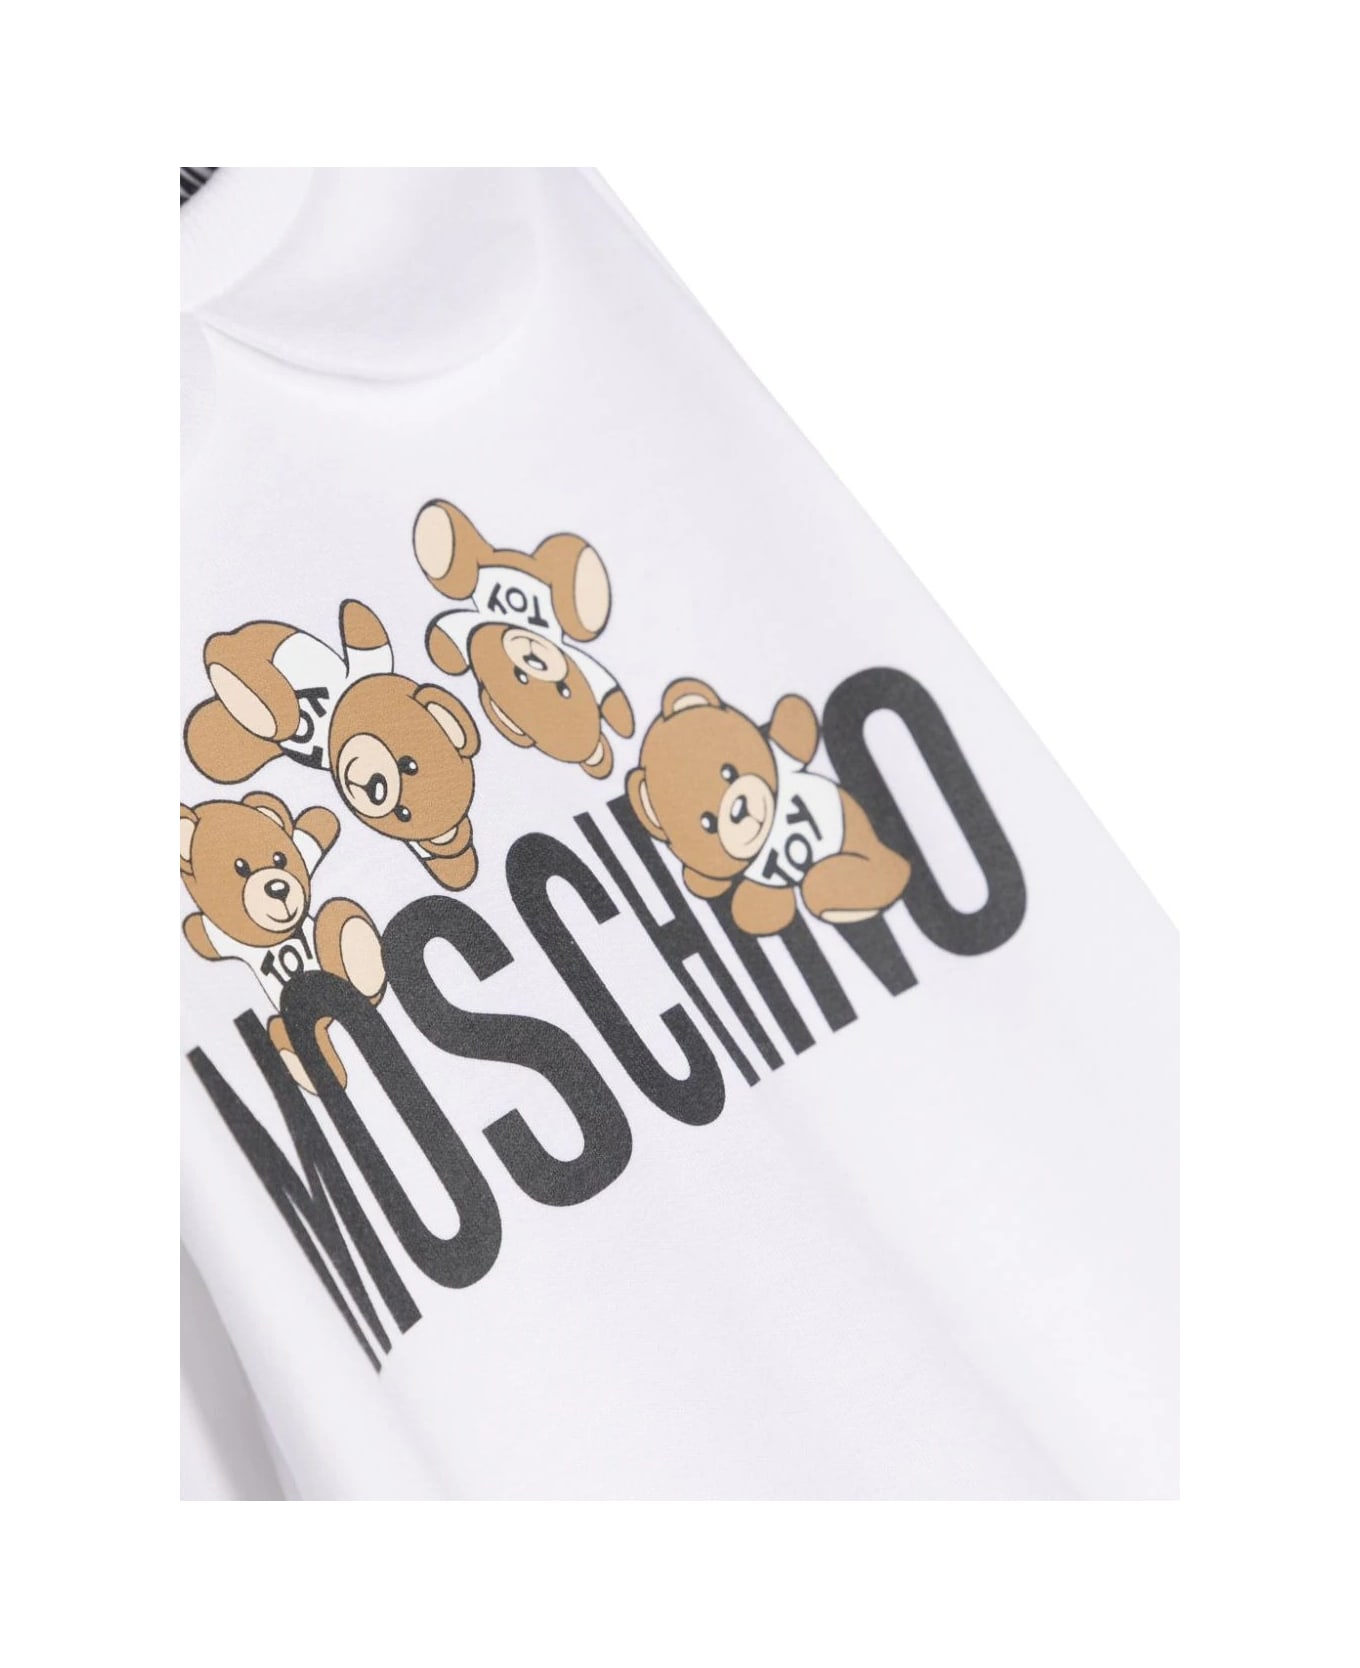 Moschino White Pyjamas With Moschino Teddy Friends Print - White